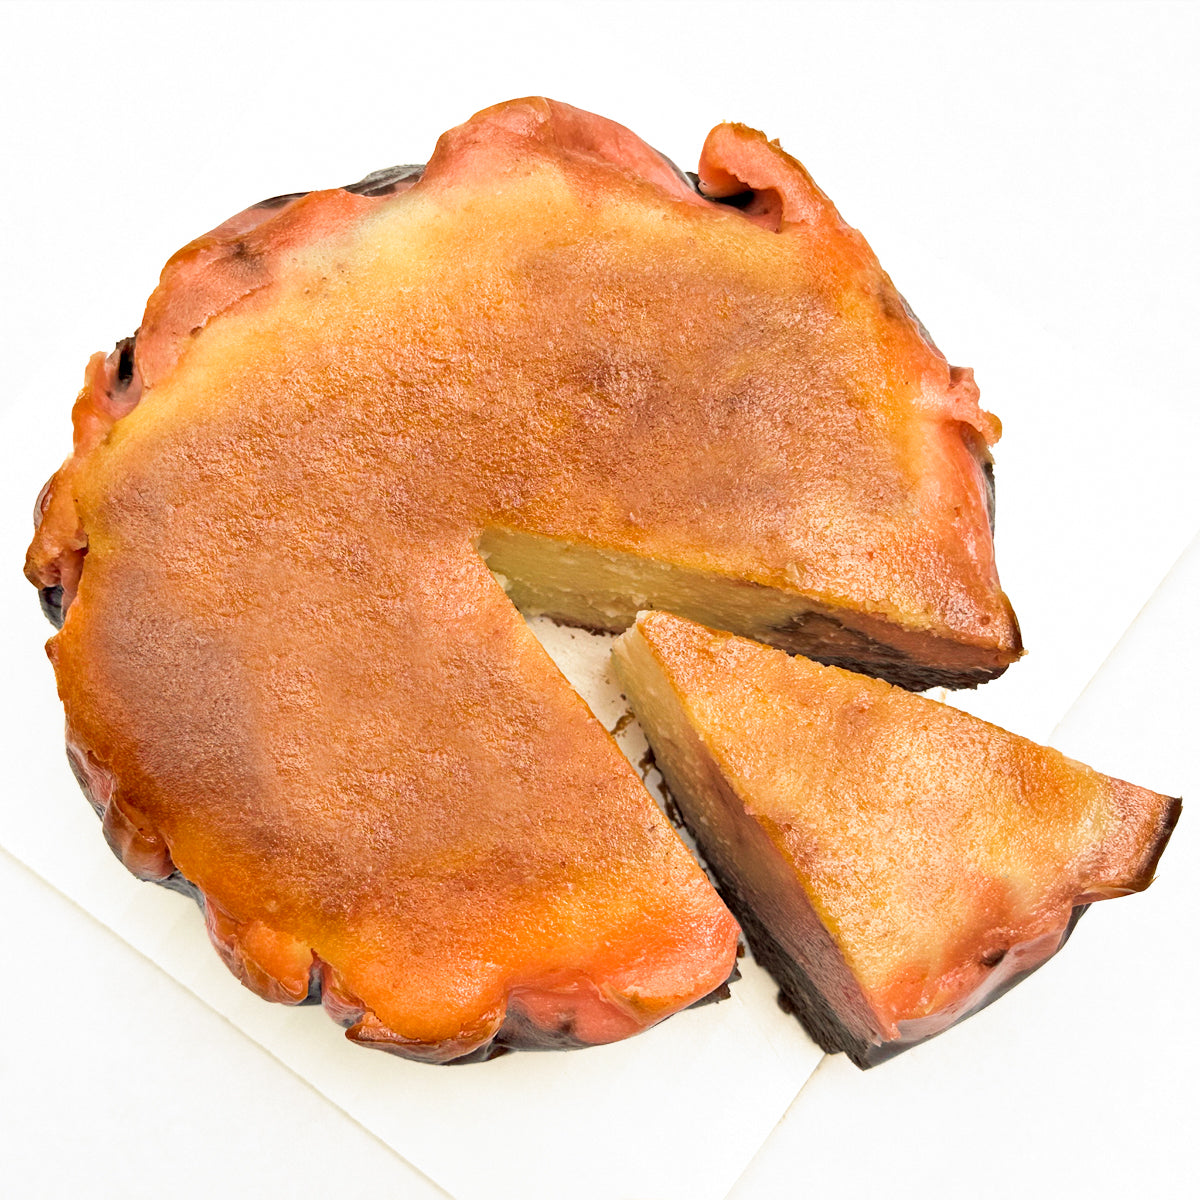 Neapolitan burnt basque cheesecake